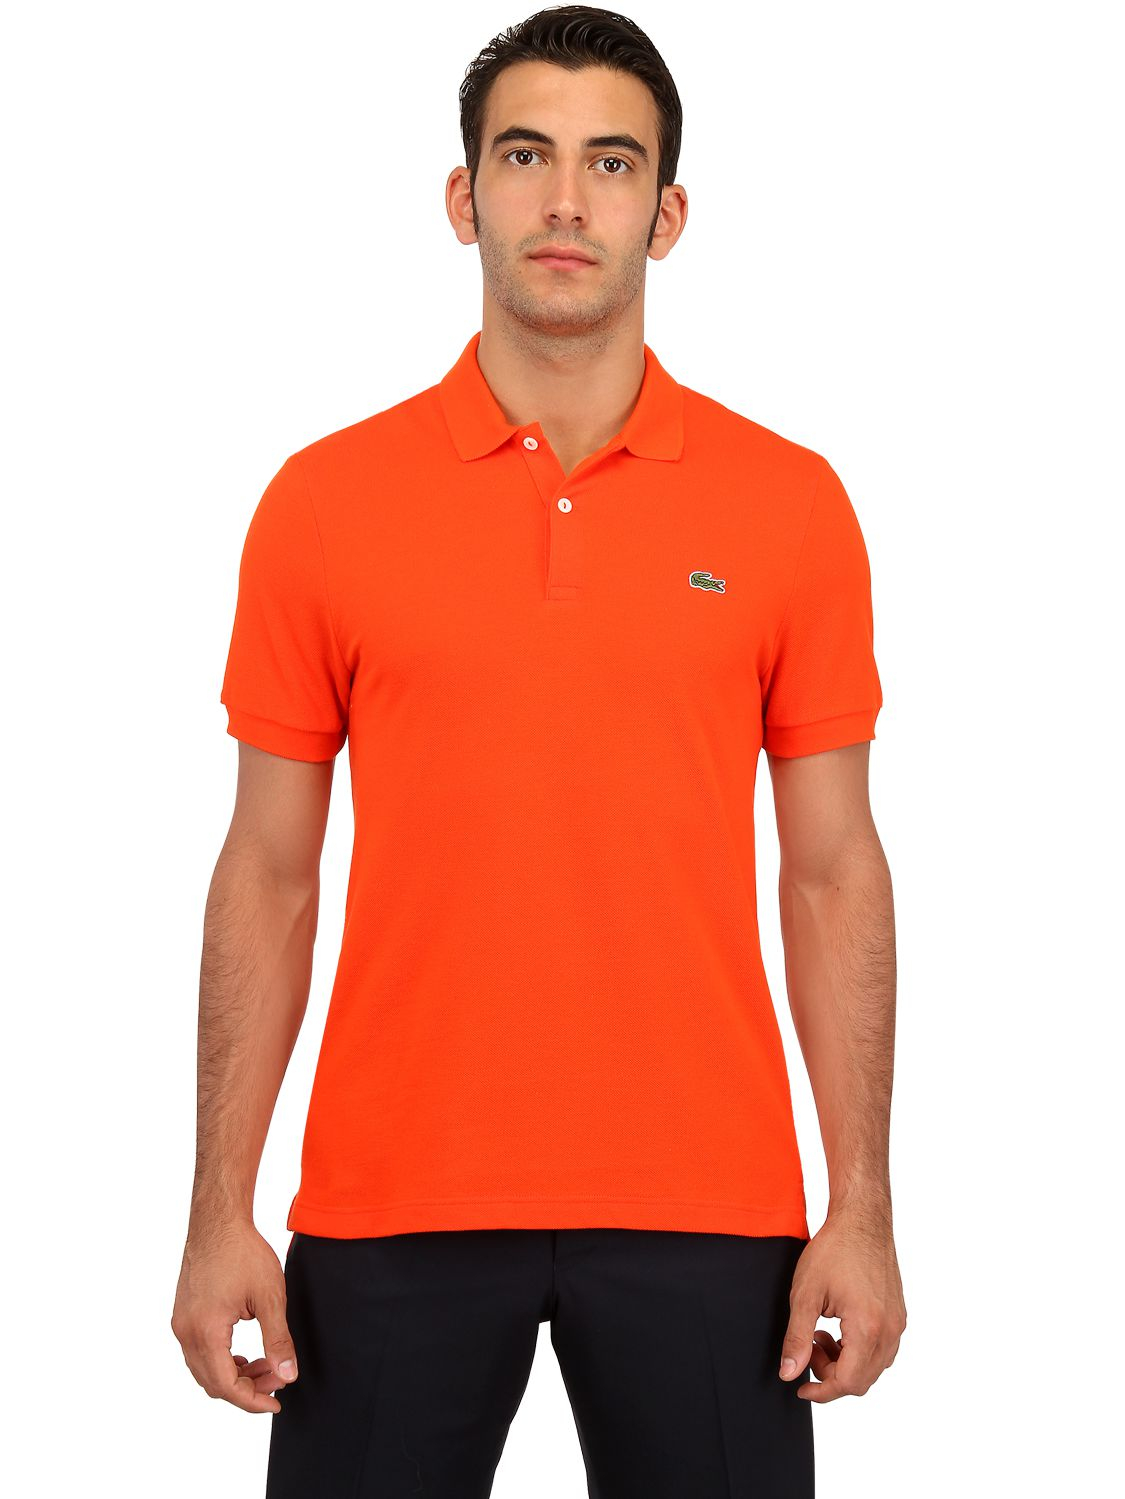 Orange Lacoste Polo Shirt Shop, SAVE 42% - www.rehmetphoto.com